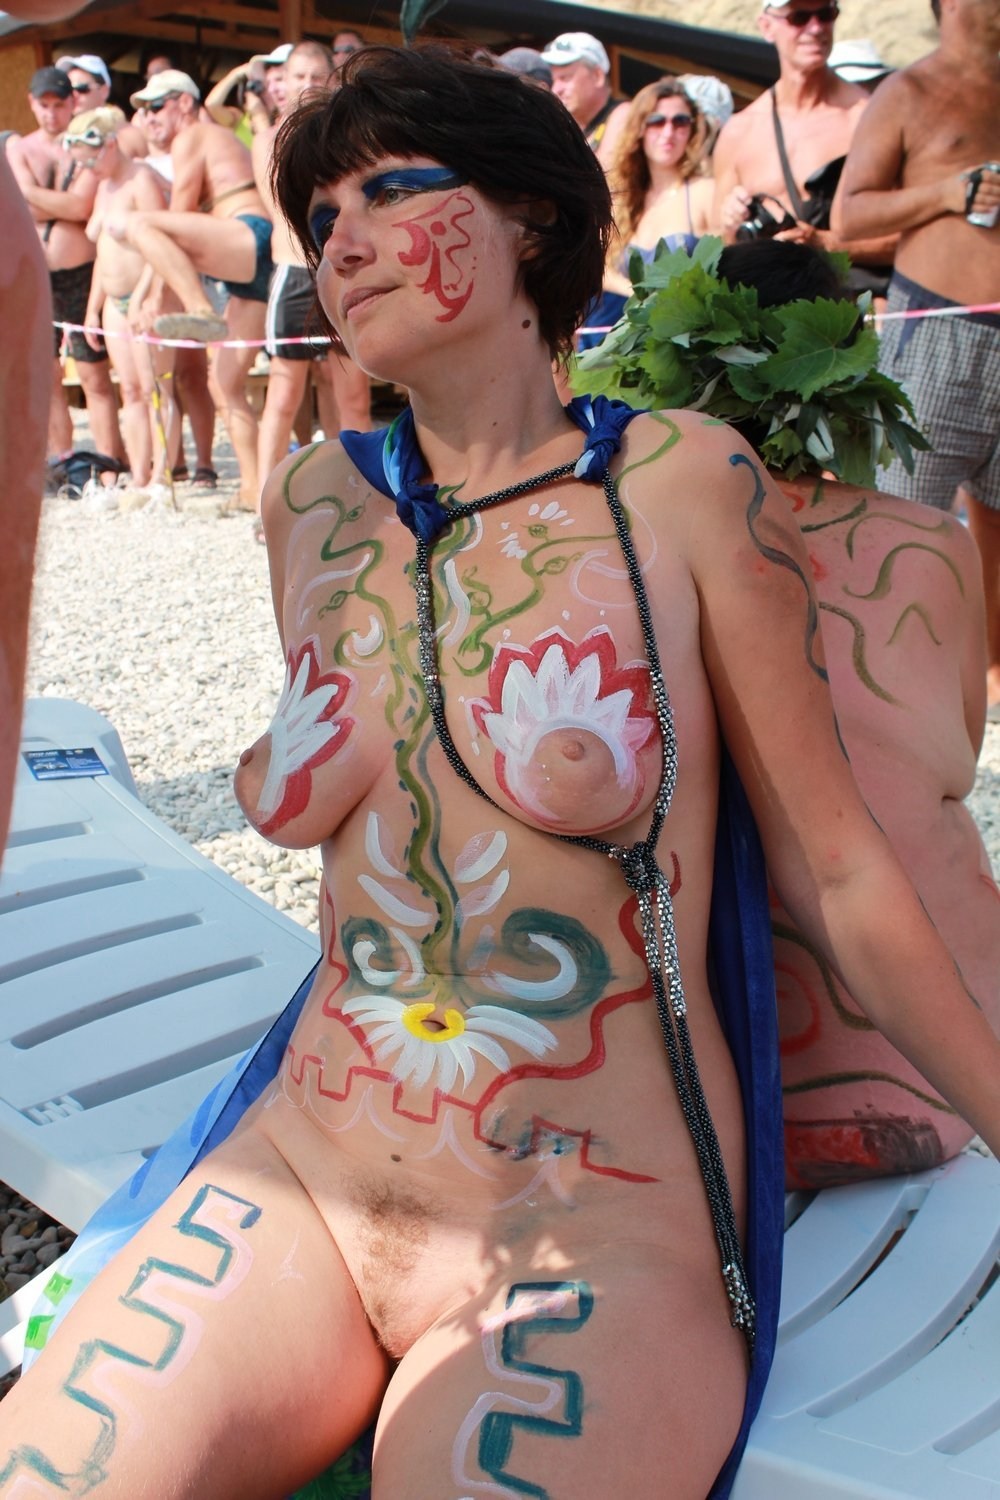 https://motherlesspics.com/uploads/posts/2022-11/1668673353_13-motherlesspics-com-p-erotika-sliv-festival-nudistov-15.jpg